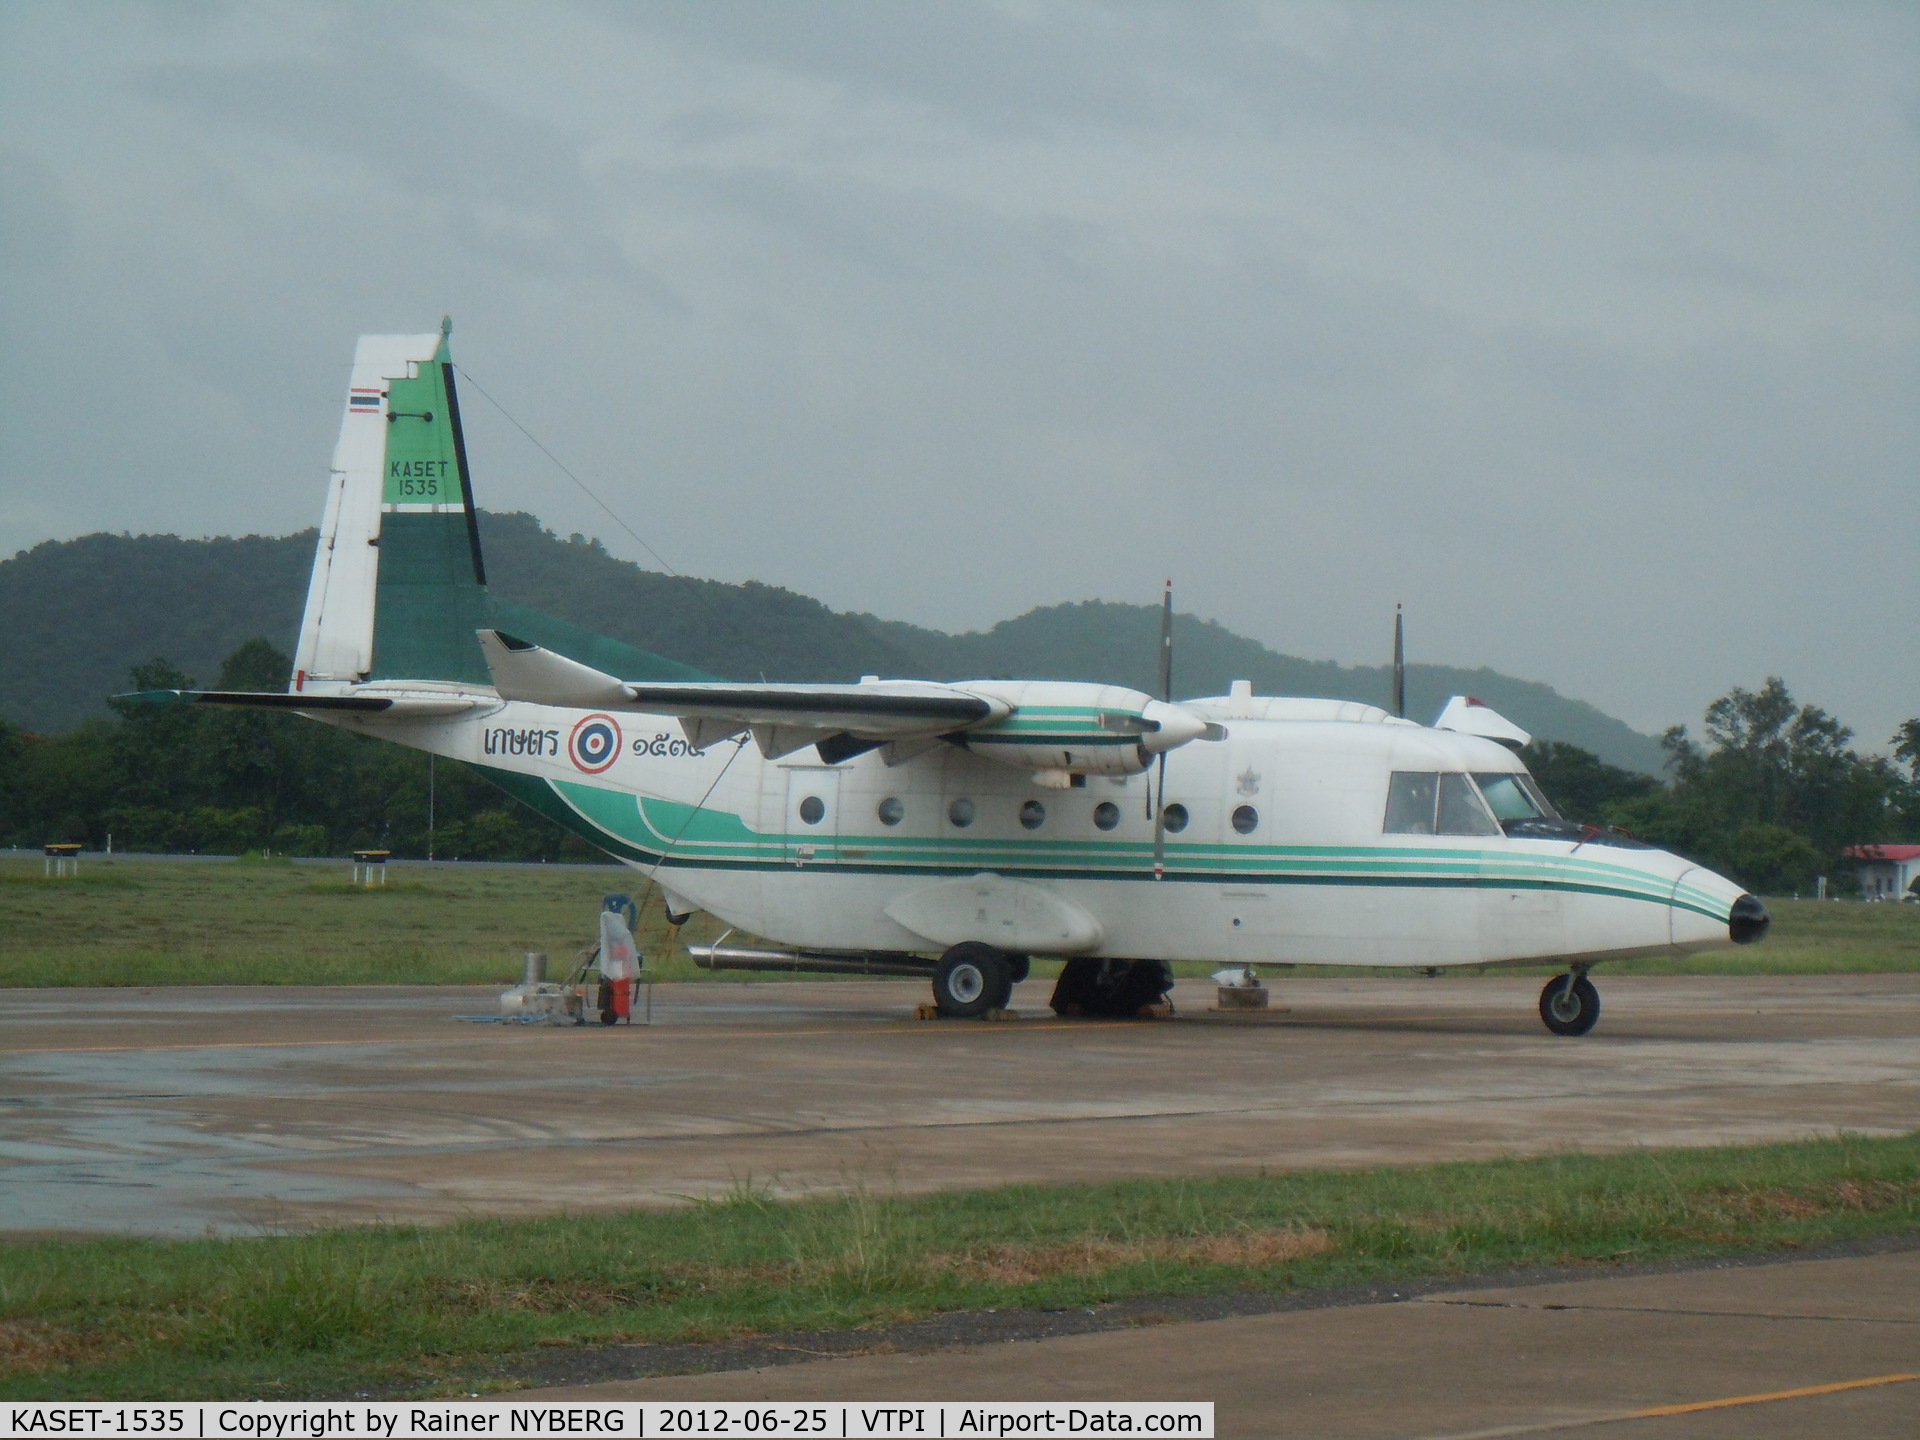 KASET-1535, 1995 CASA C-212-300 Aviocar C/N 452, C212-AA73-3-452